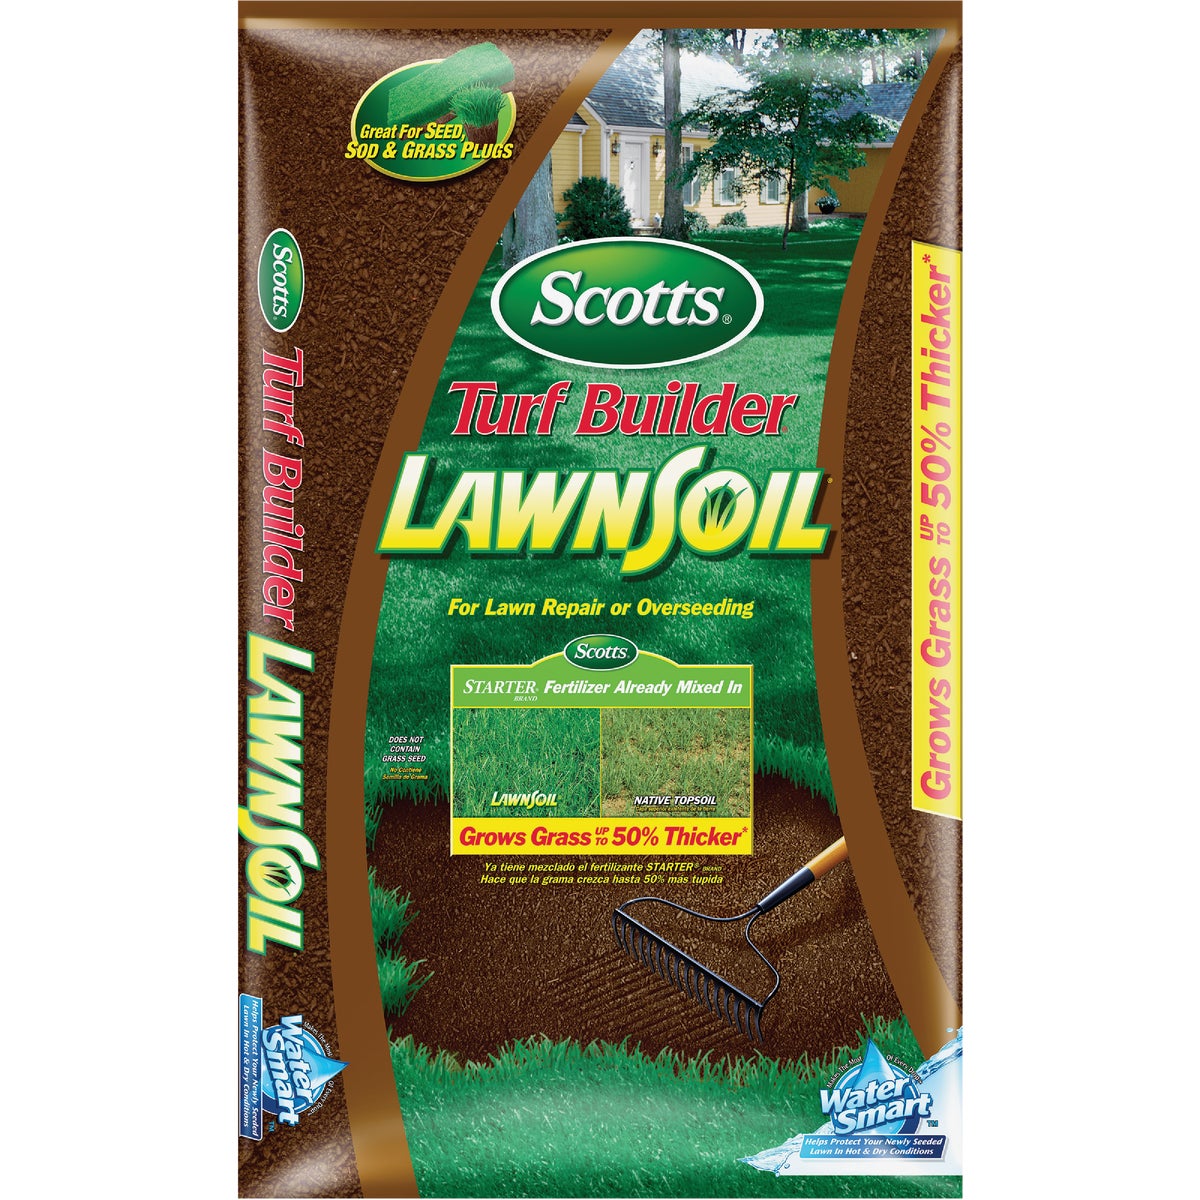 Scotts Turf Builder LawnSoil 1 Cu. Ft. 33 Lb.All Purpose Top Soil